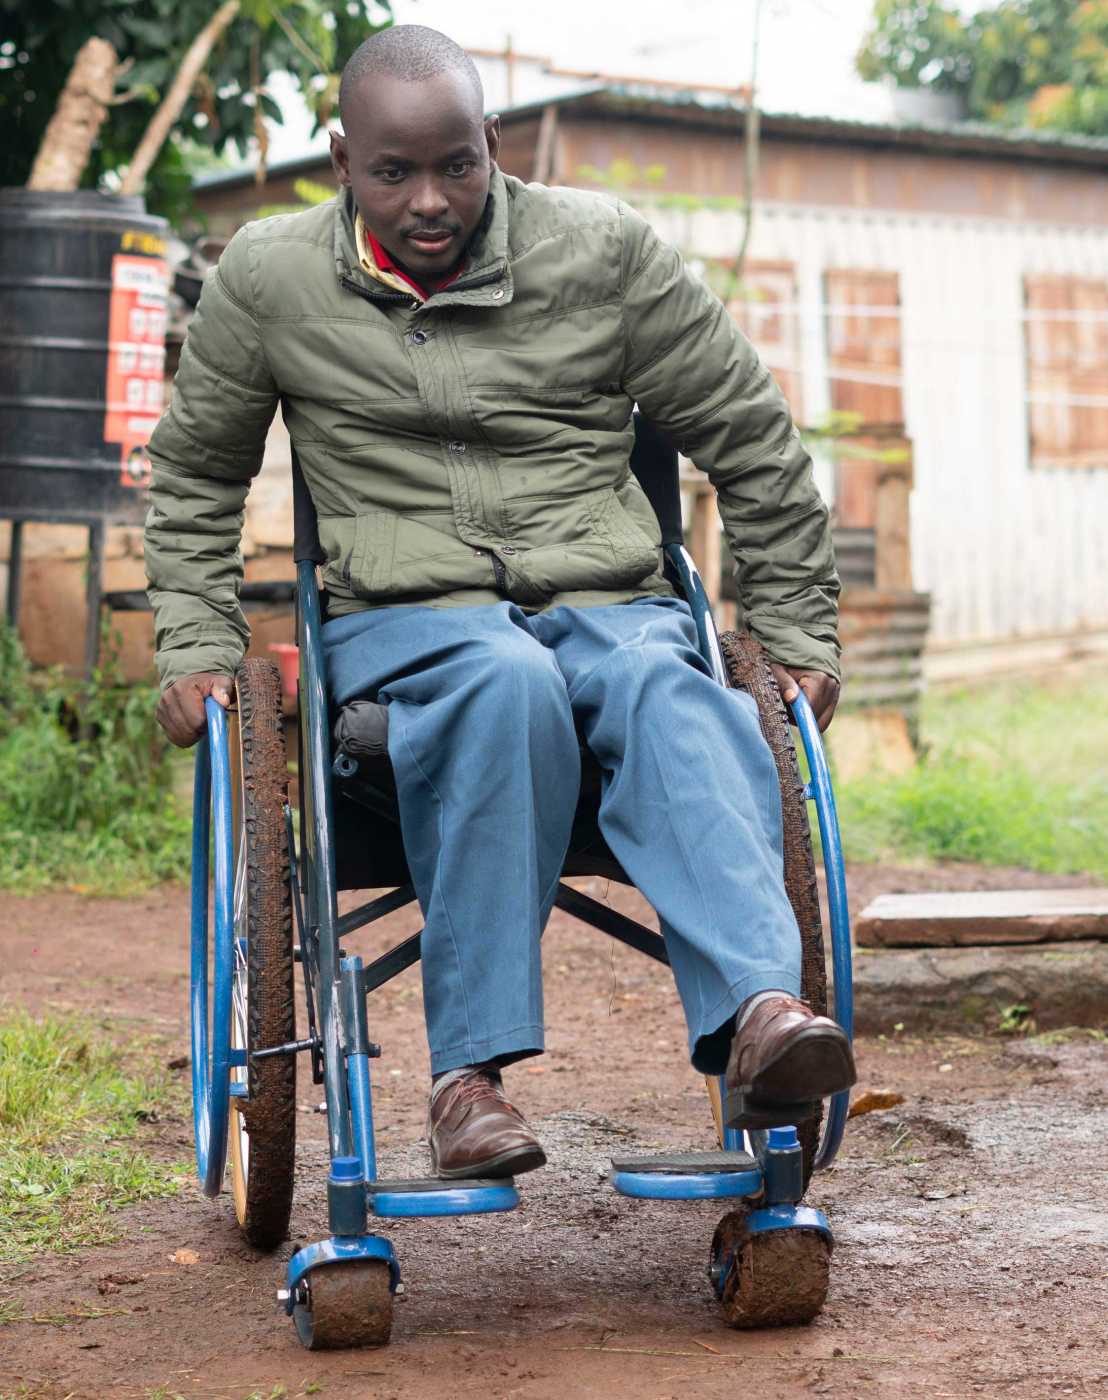 Enlarged view: man with wheelchair drives through muddy terrain